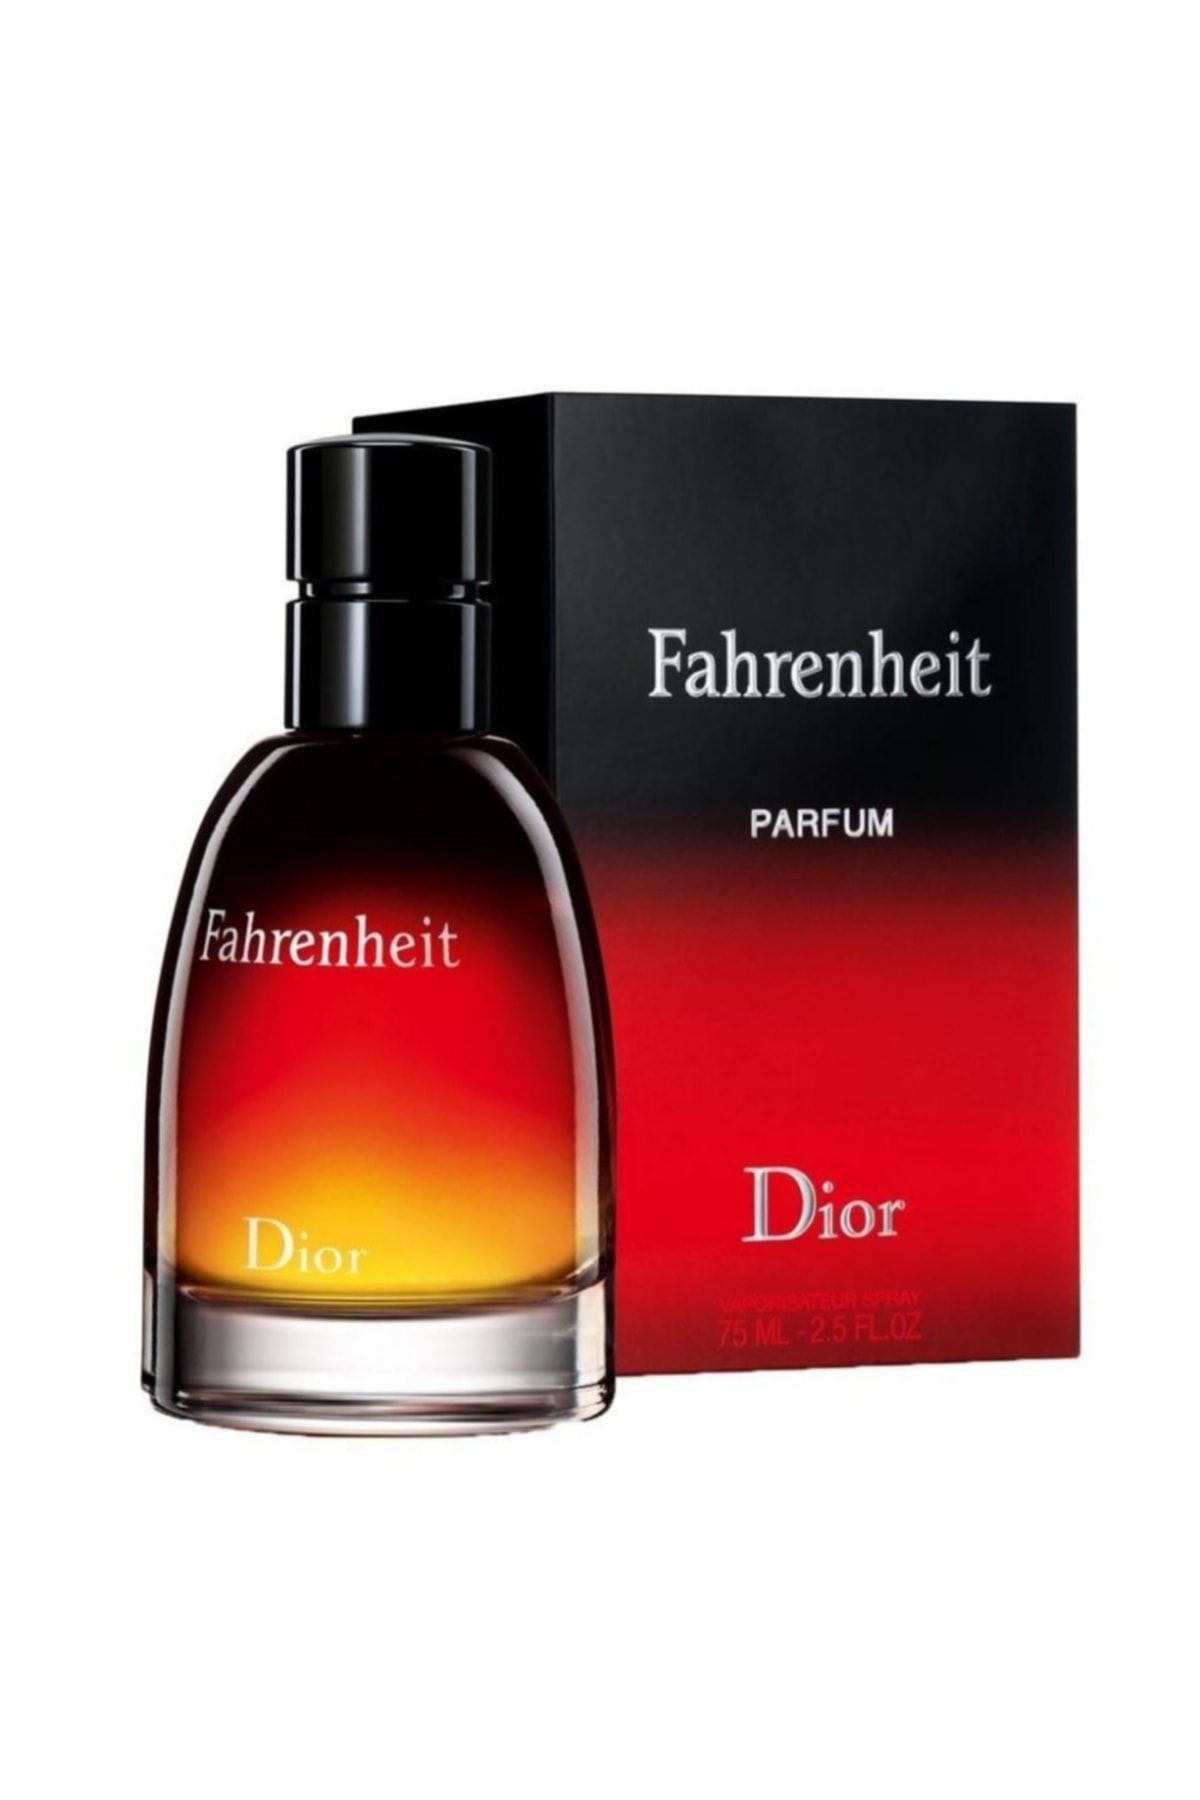 Chi tiết với hơn 79 về dior fahrenheit parfum opinie hay nhất  Du học Akina